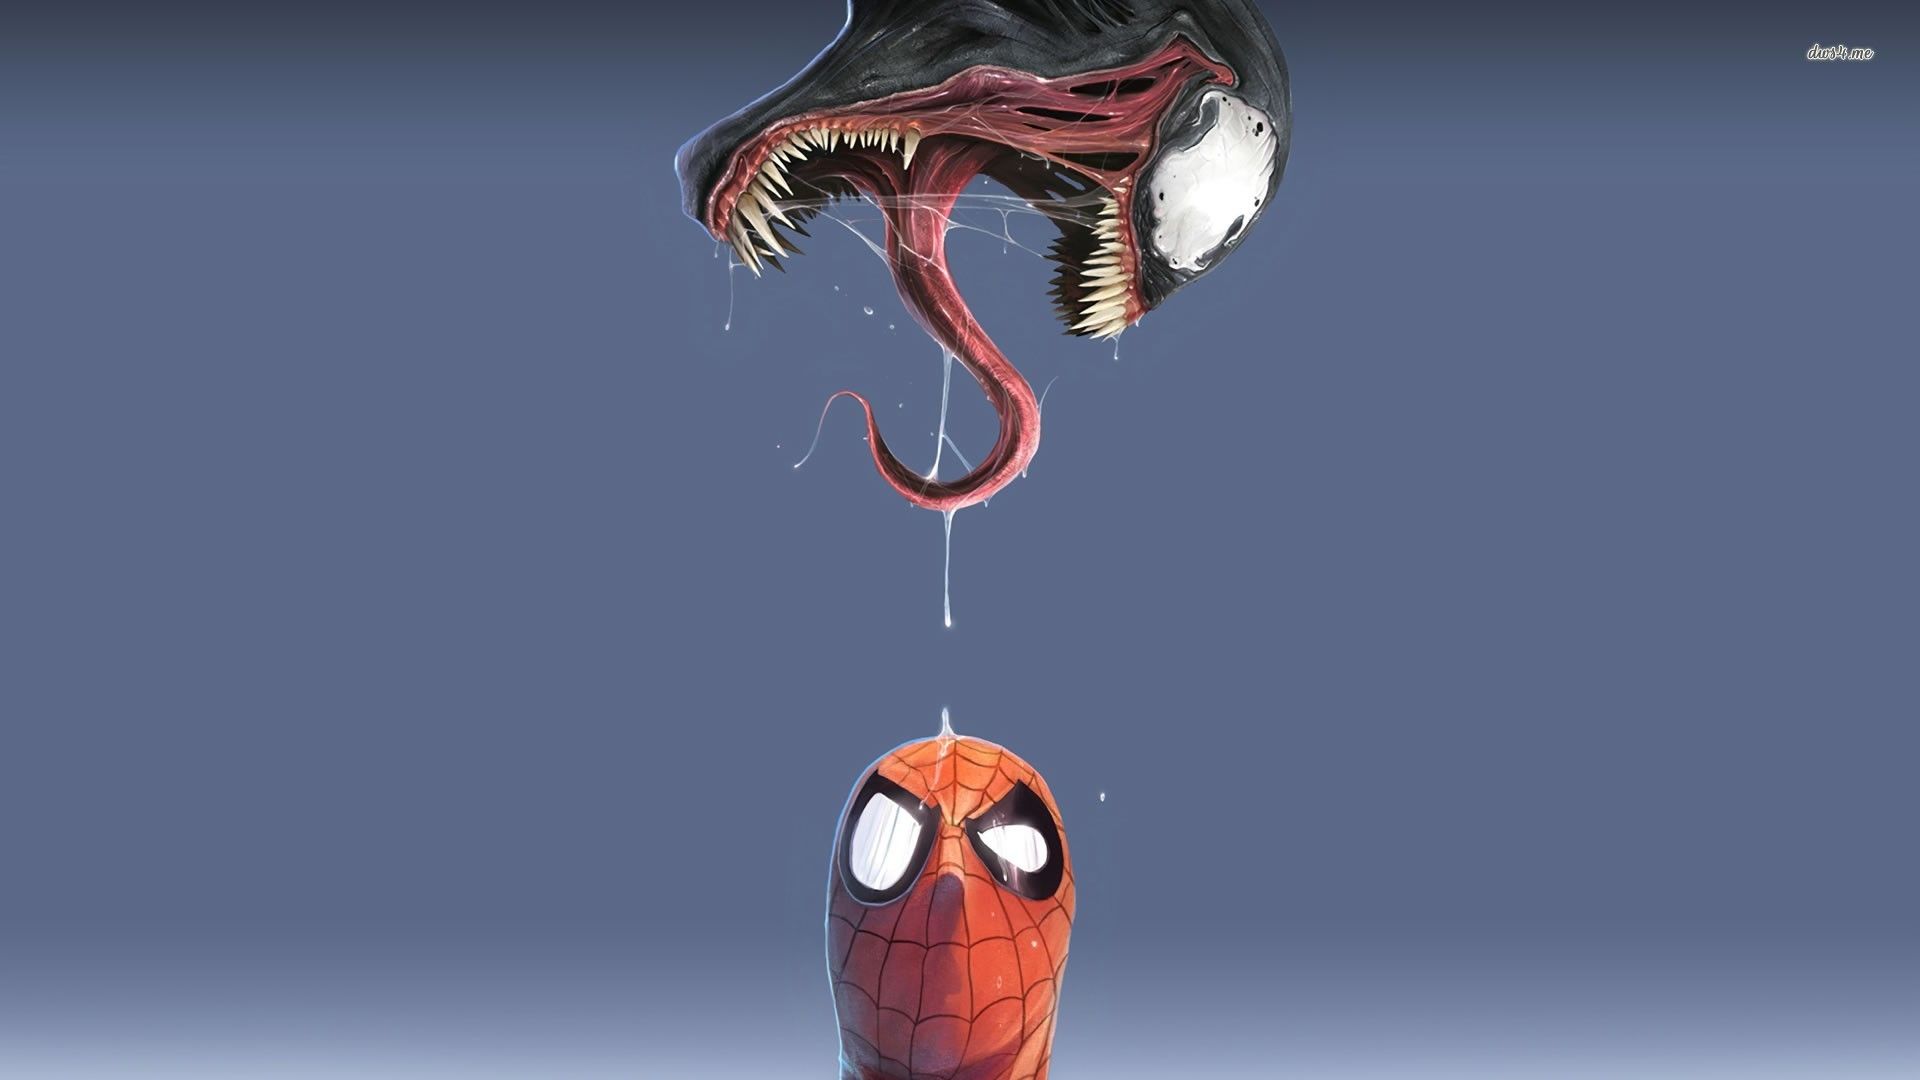 Venom vs Spider-Man wallpaper - Comic wallpapers - #10764